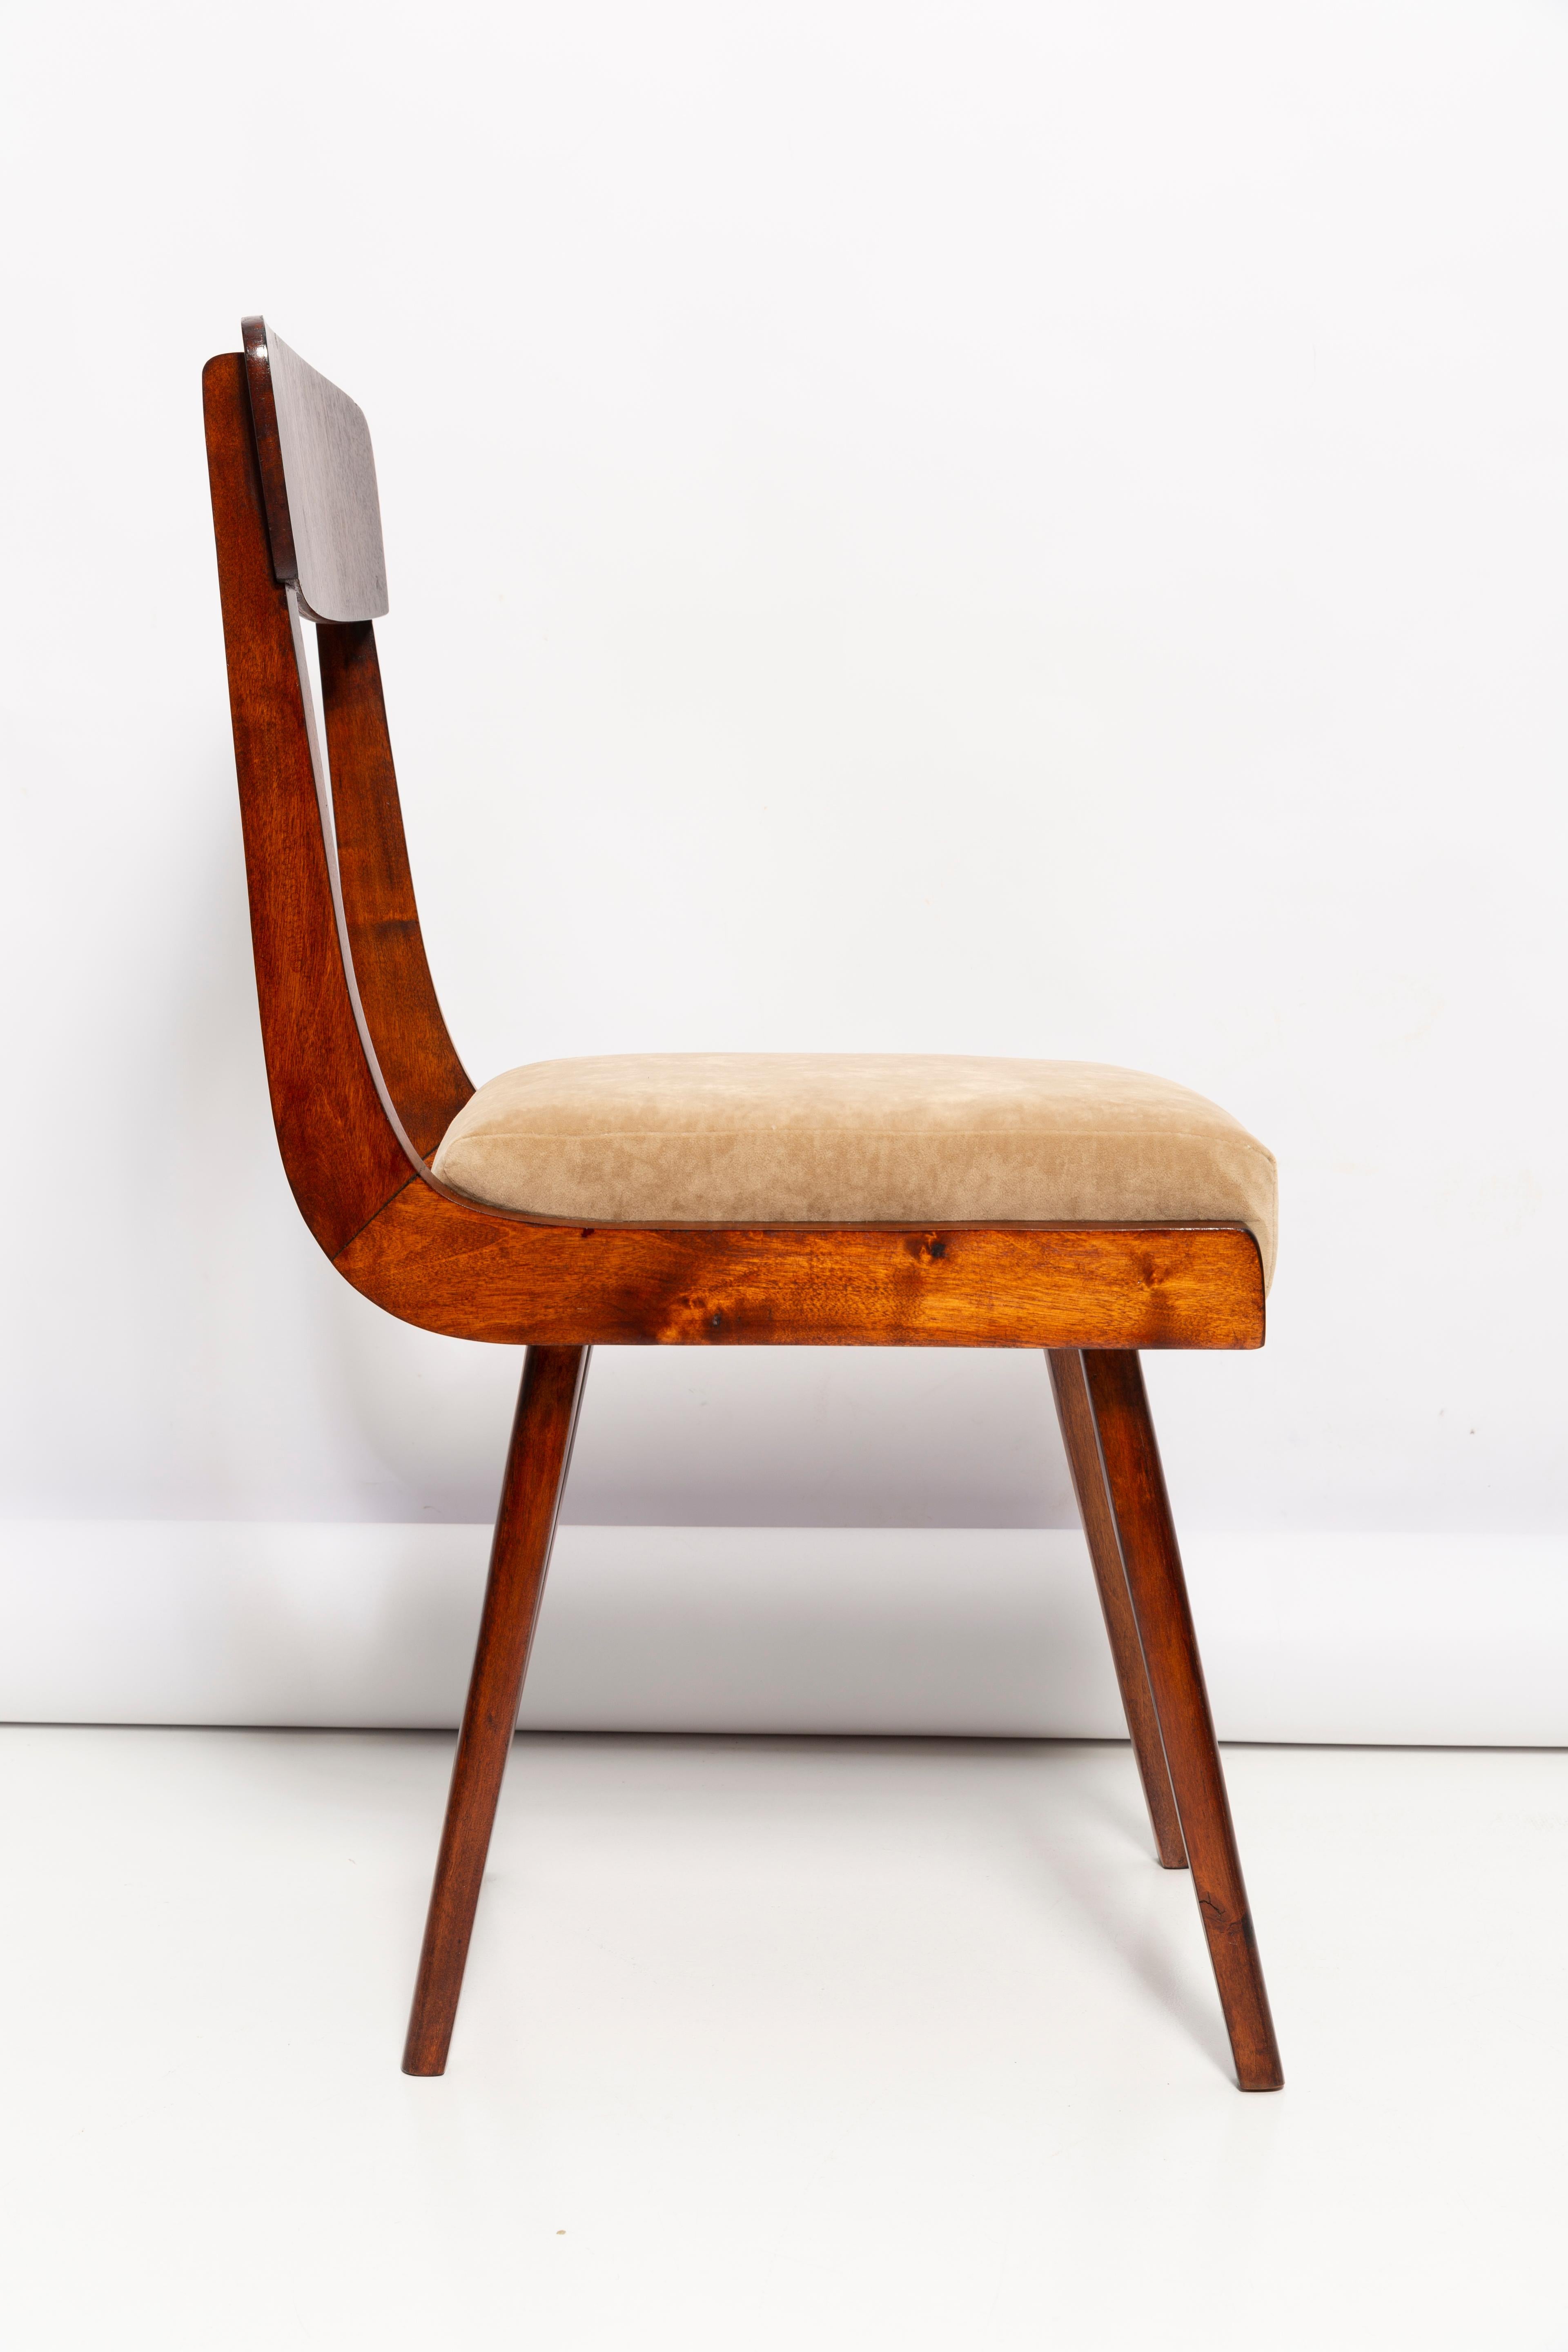 Polish Mid Century Gazelle Beige Wood Chair, Europe, 1960s For Sale